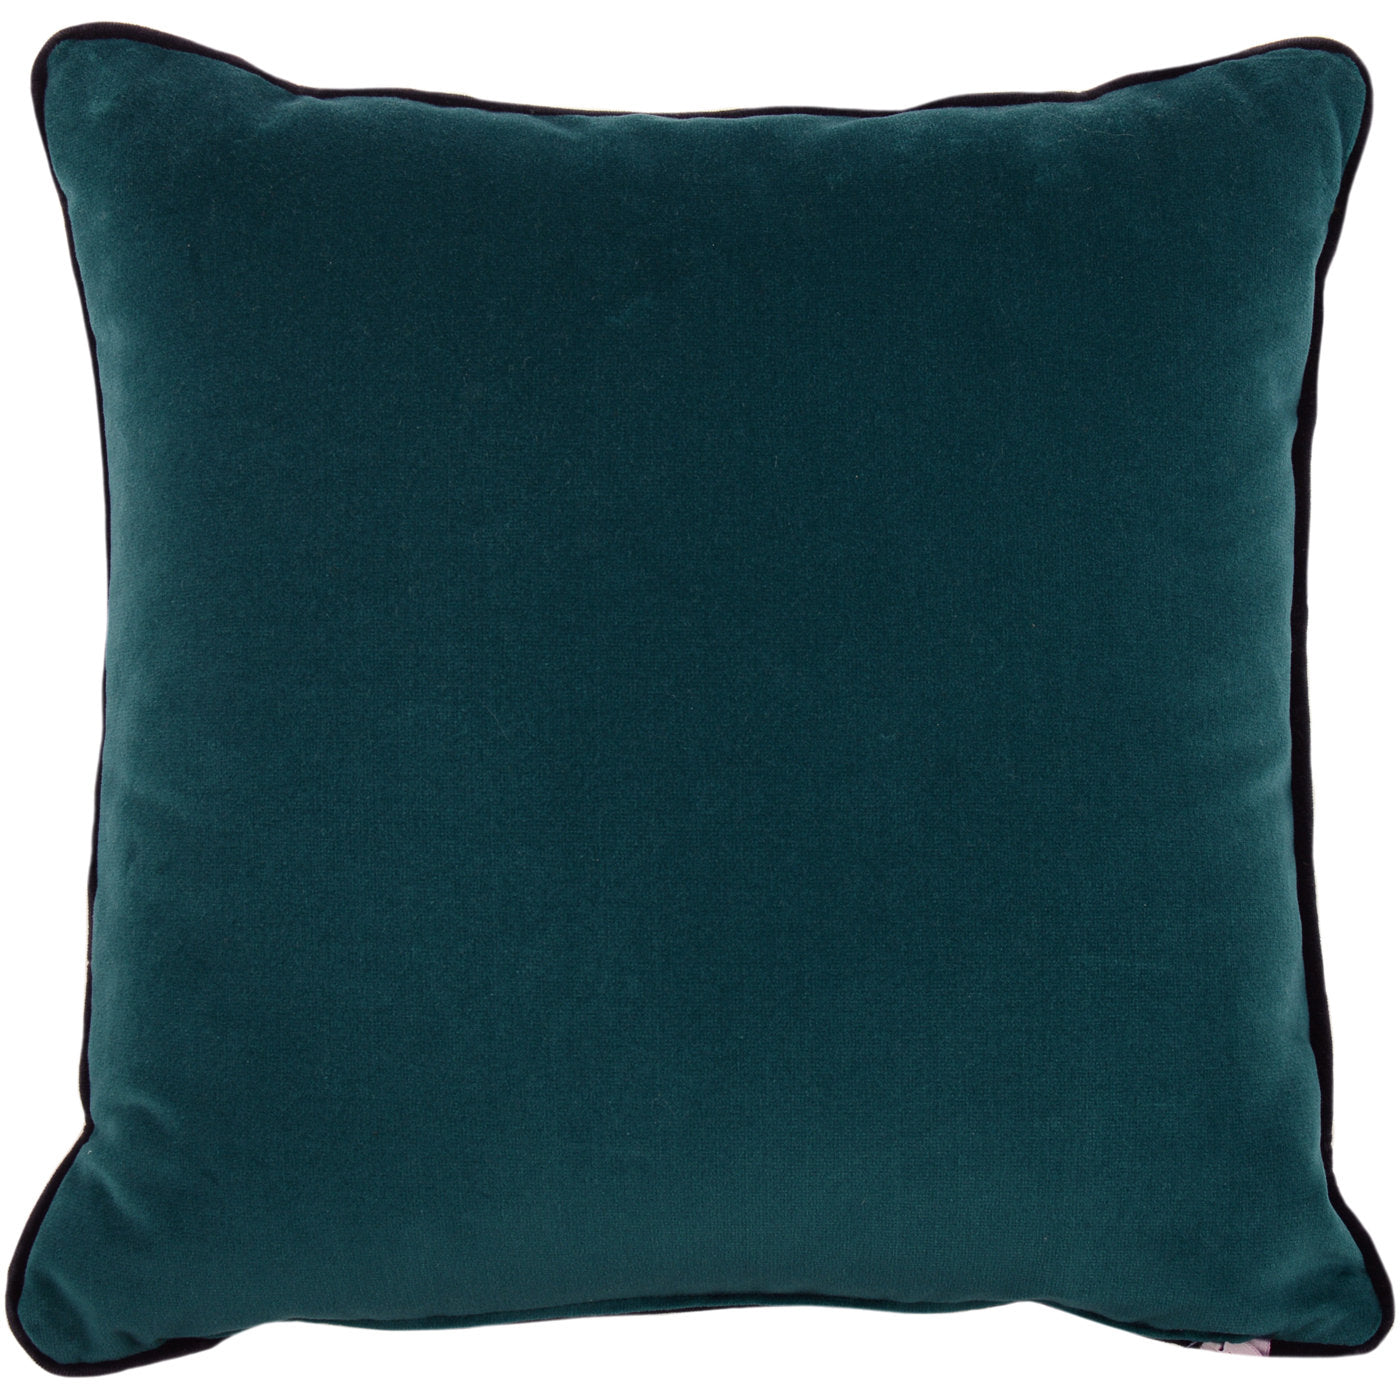 Light Blue Carré Cushion in geometric jacquard fabric - Alternative view 1